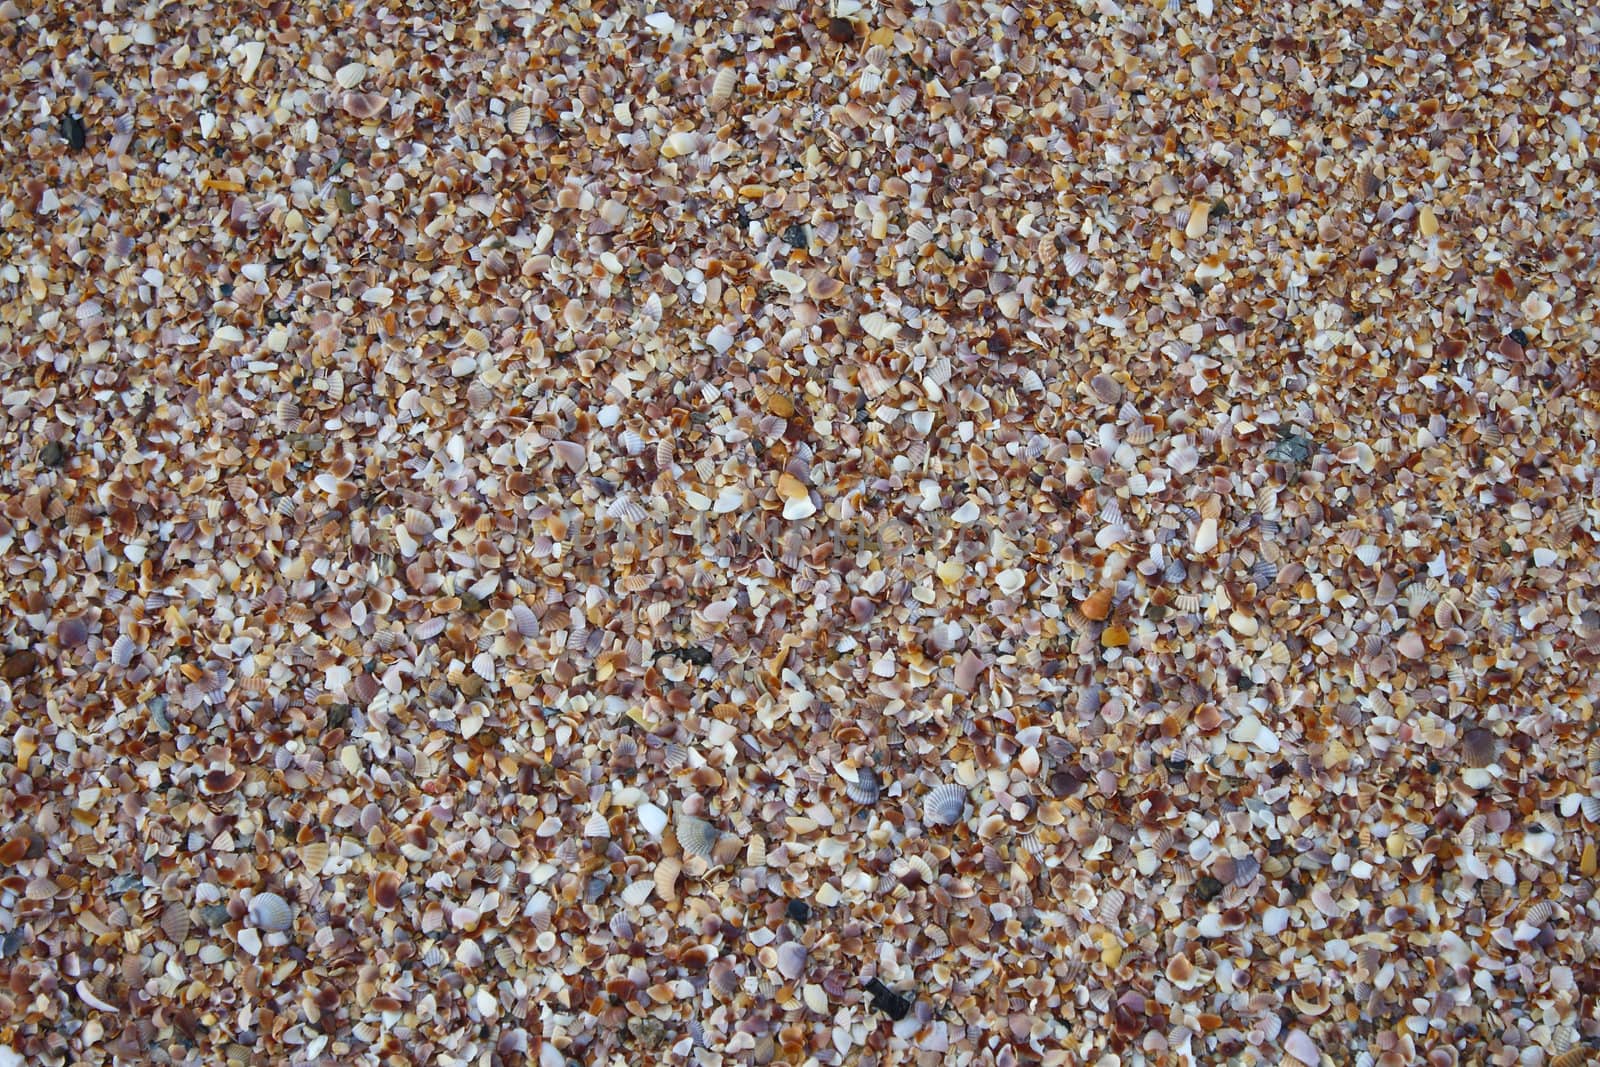 Texture of sand on the beach